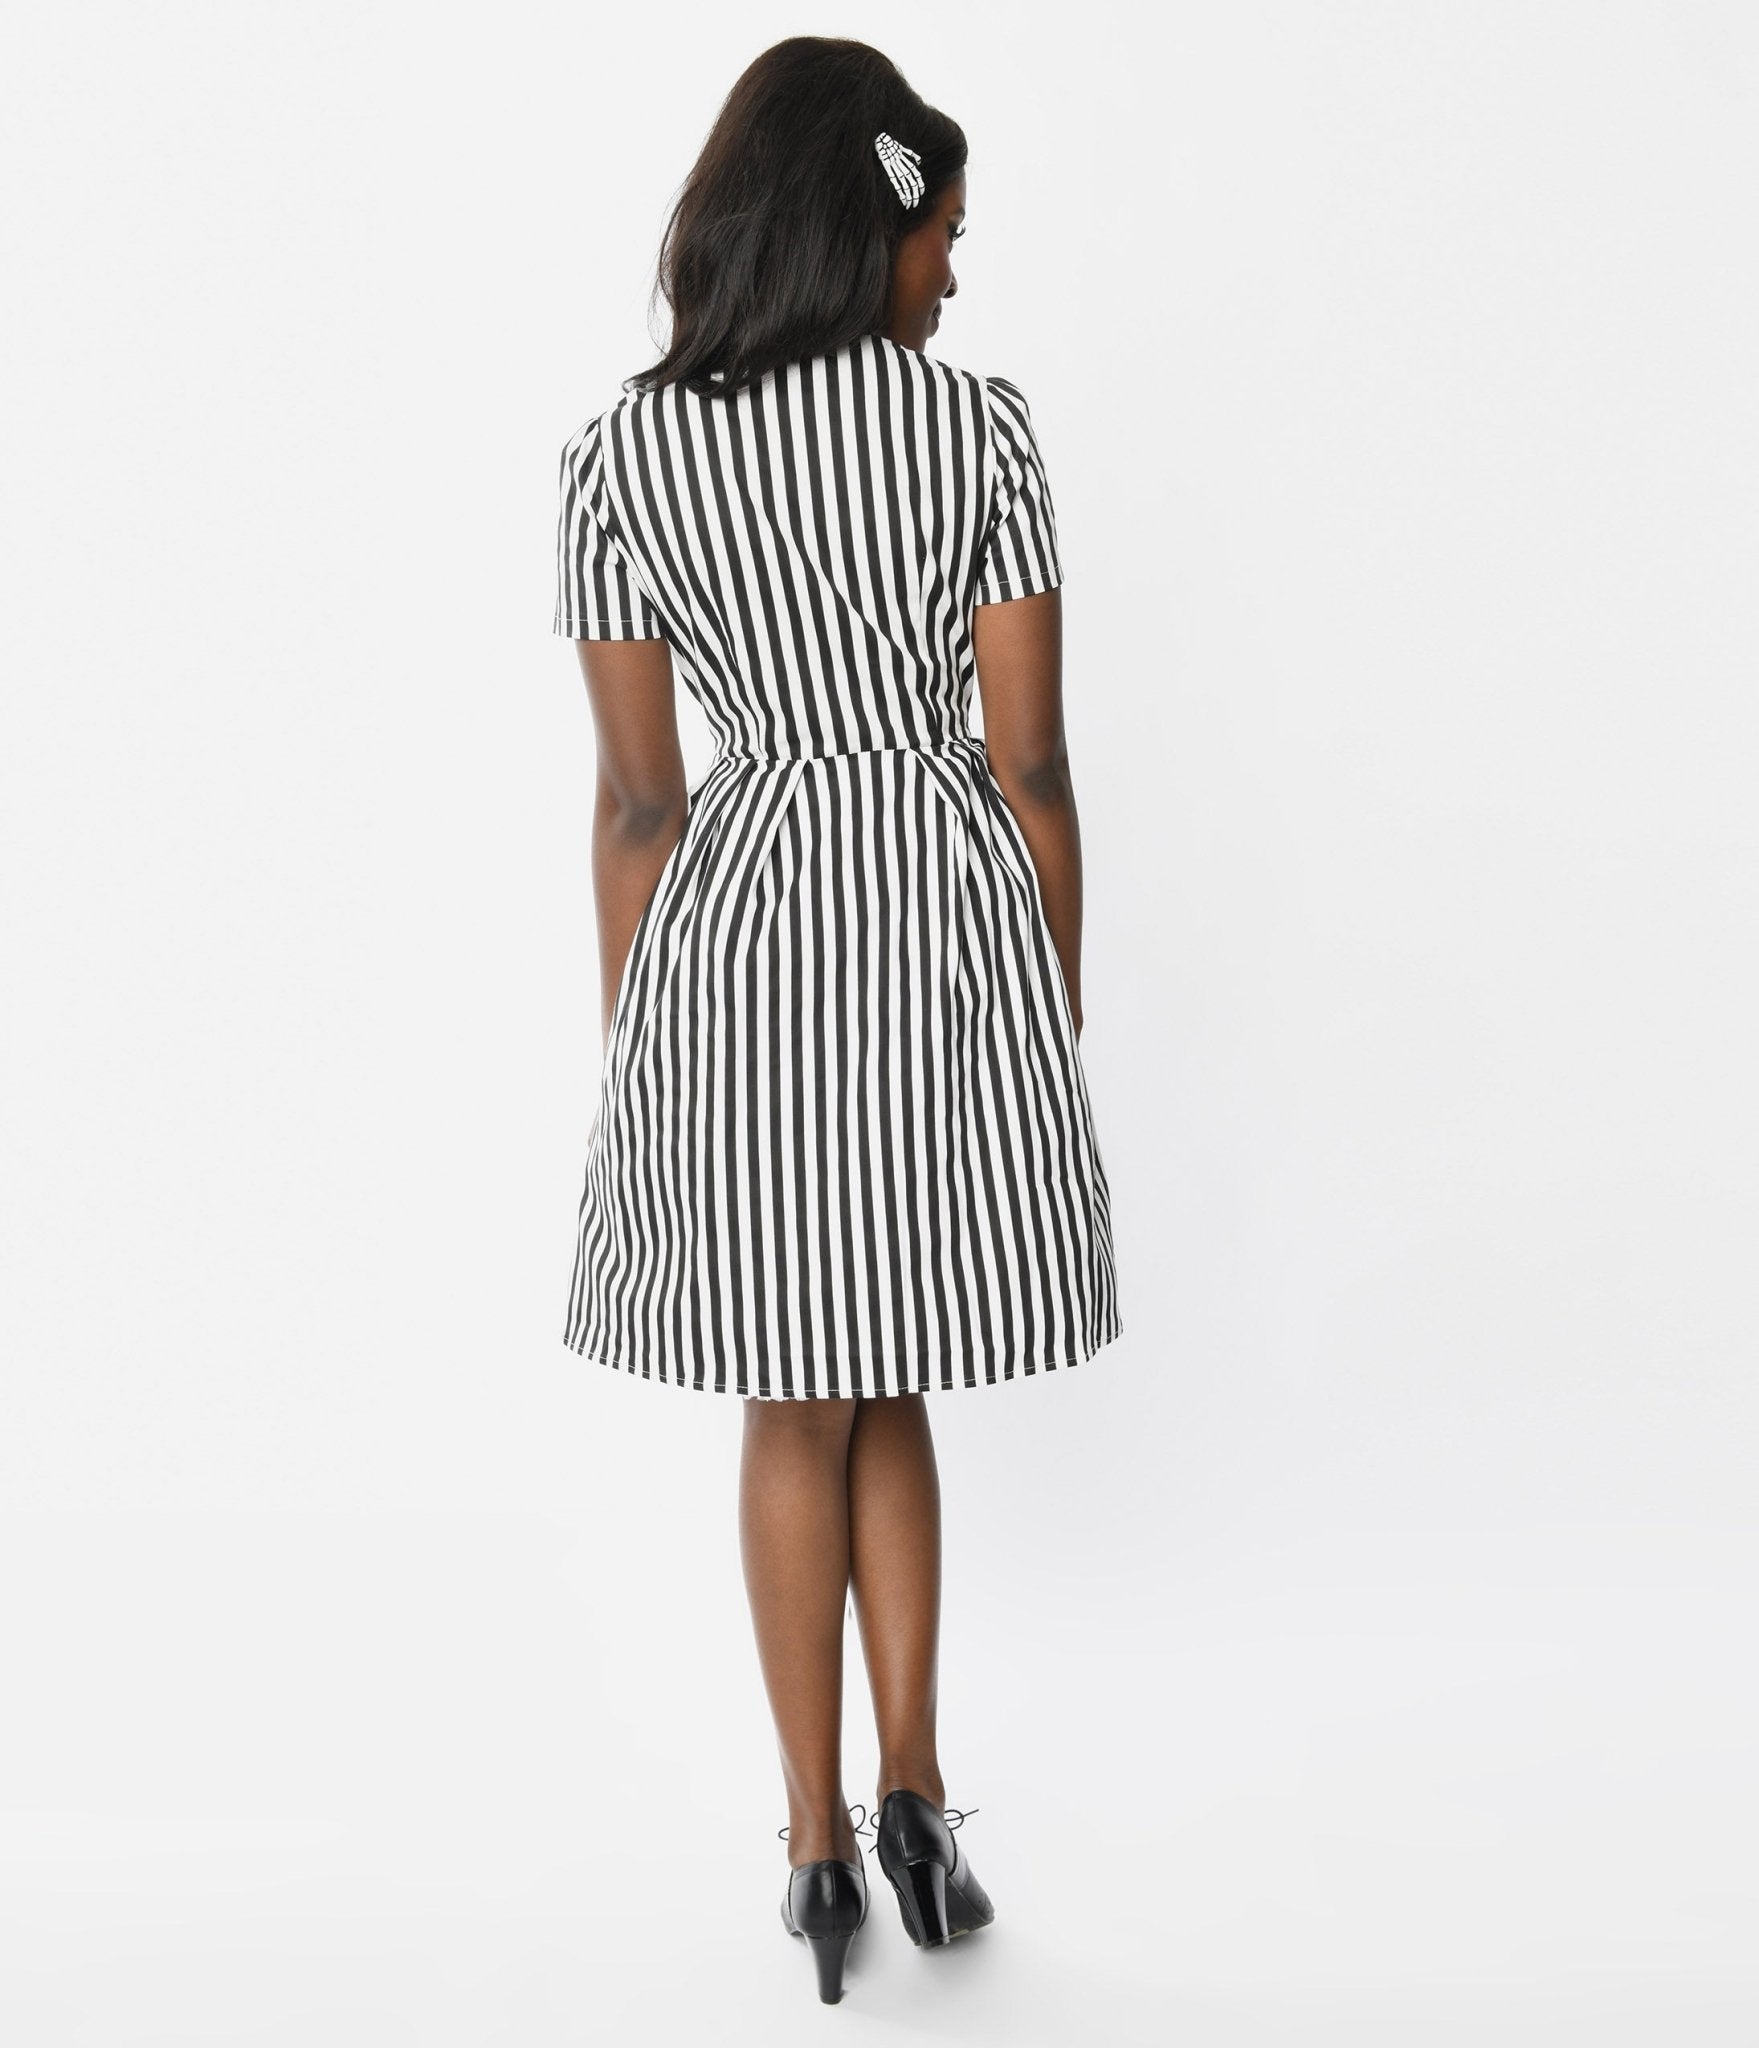 Plus Size Black & White Skull Rockabilly Flare Dress – Unique Vintage